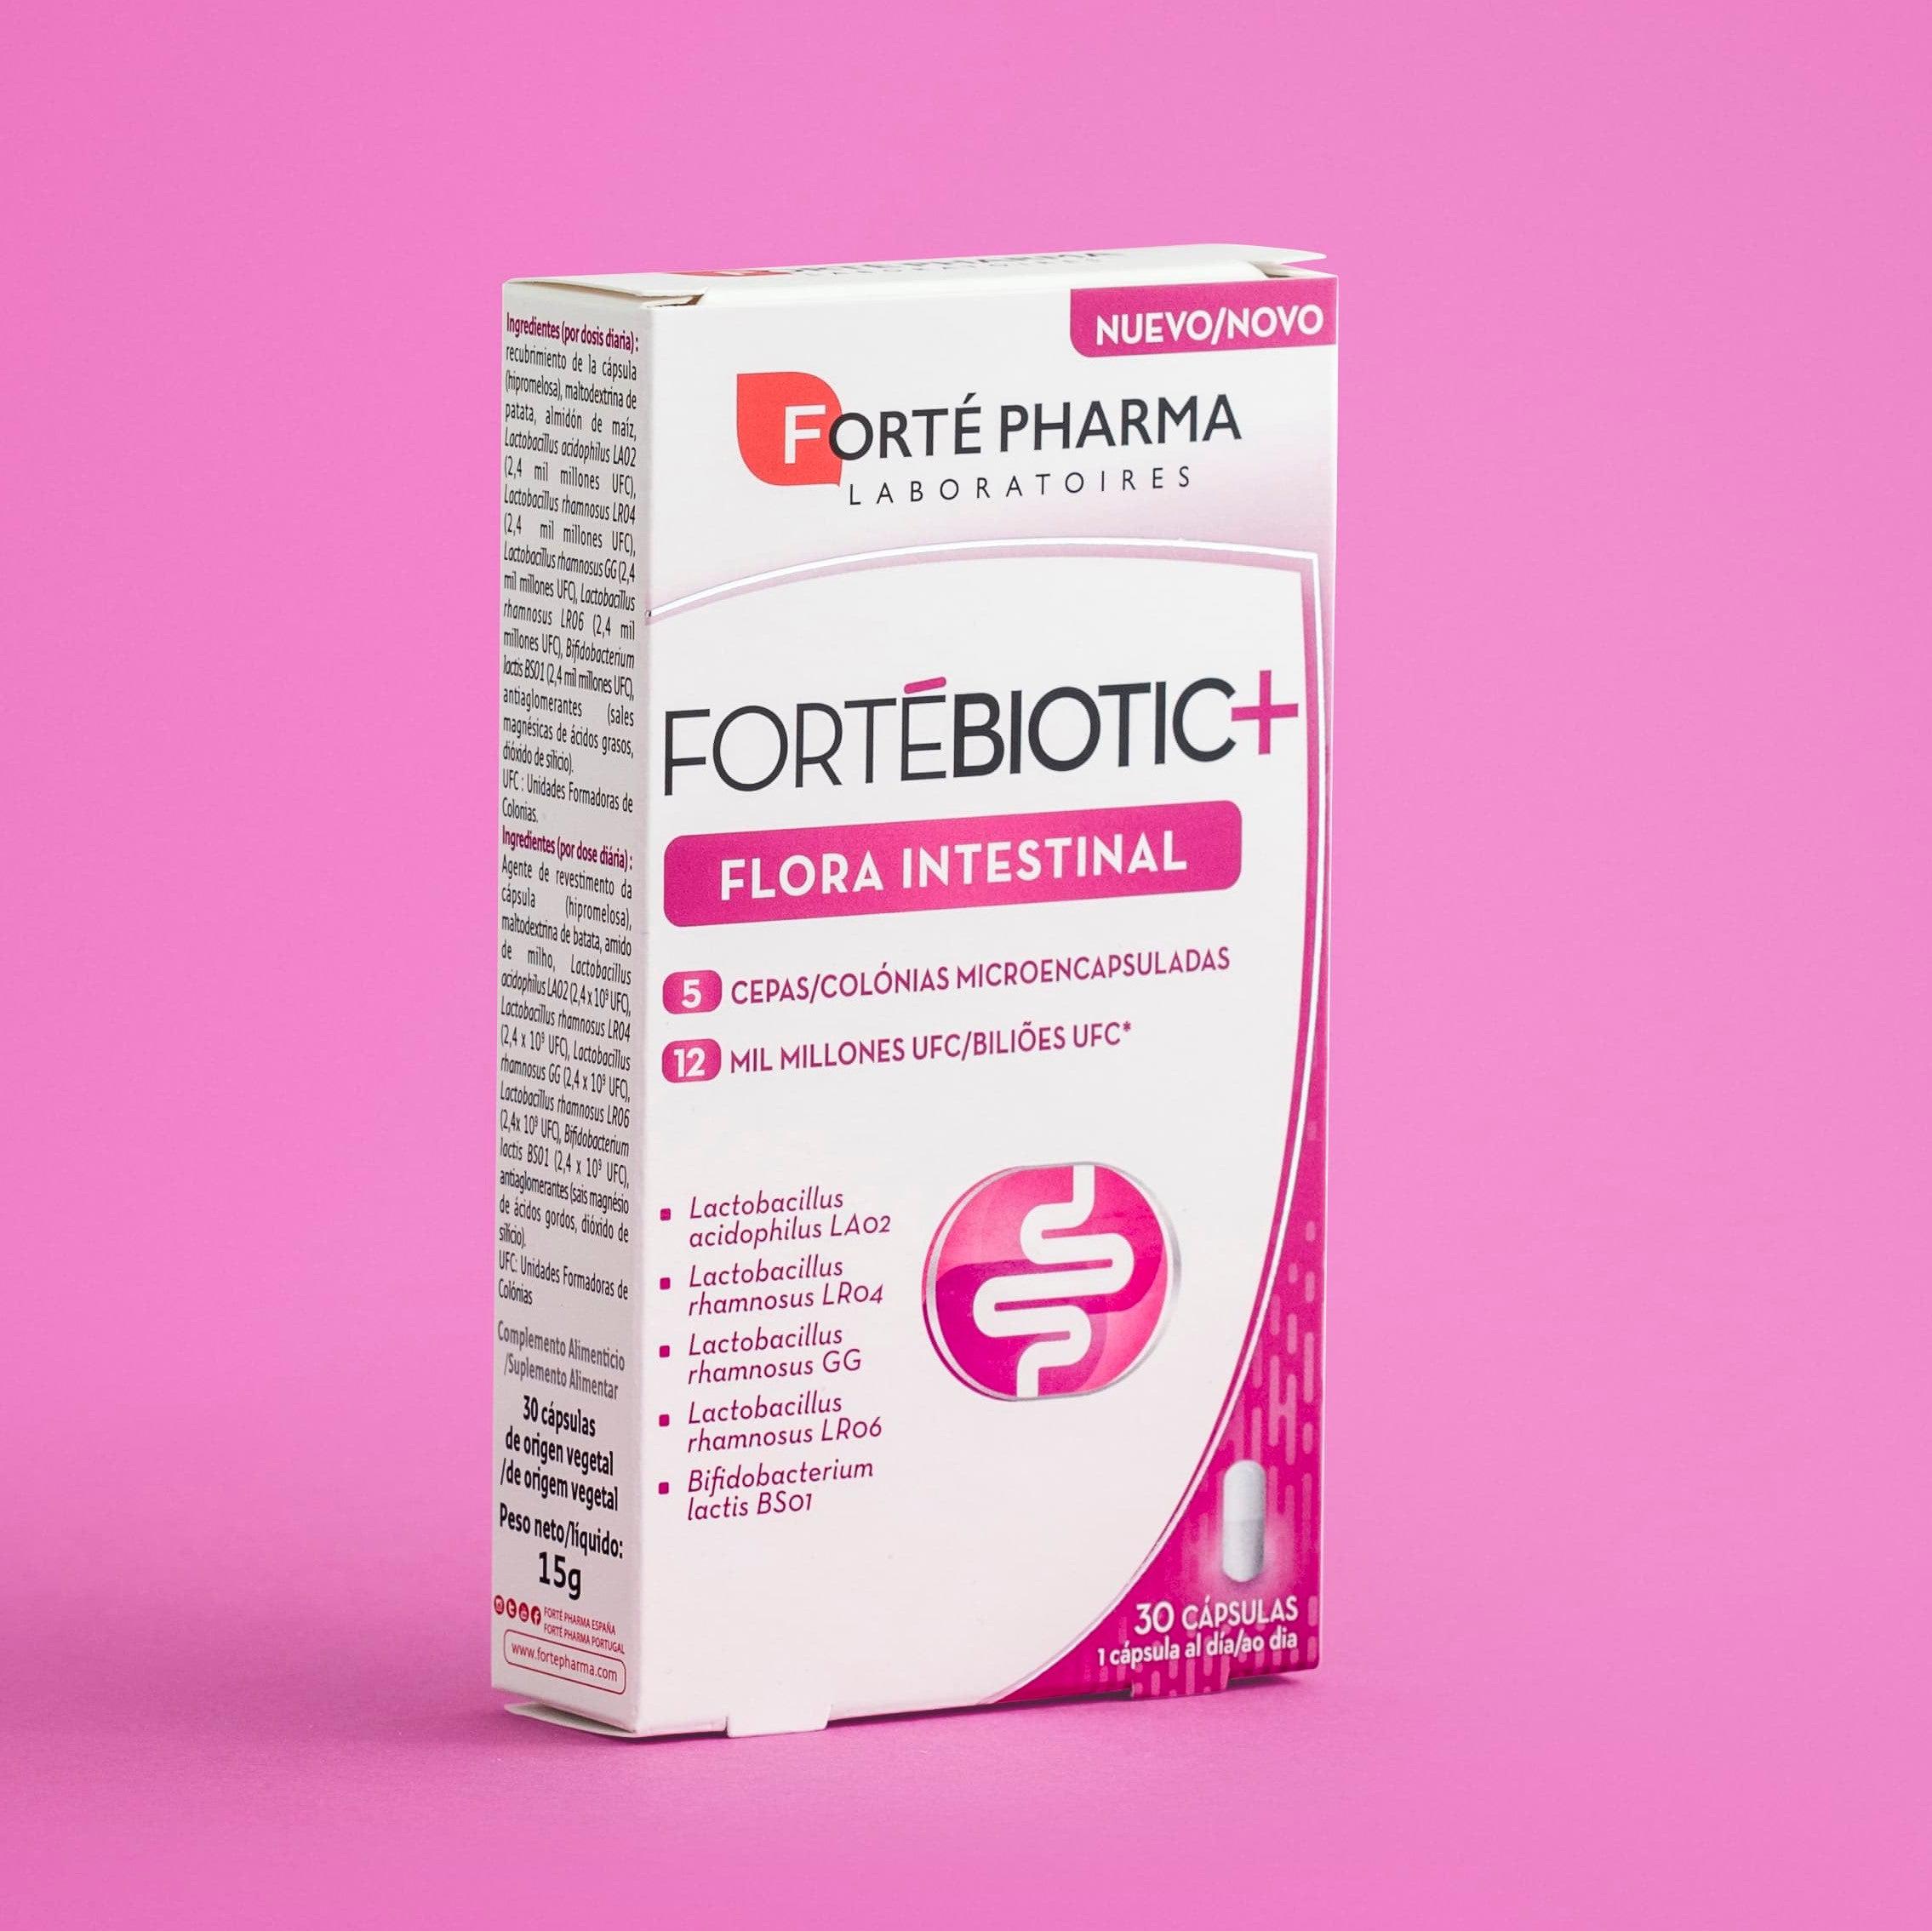 fortébiotic+ flora intestinal-Forté Pharma